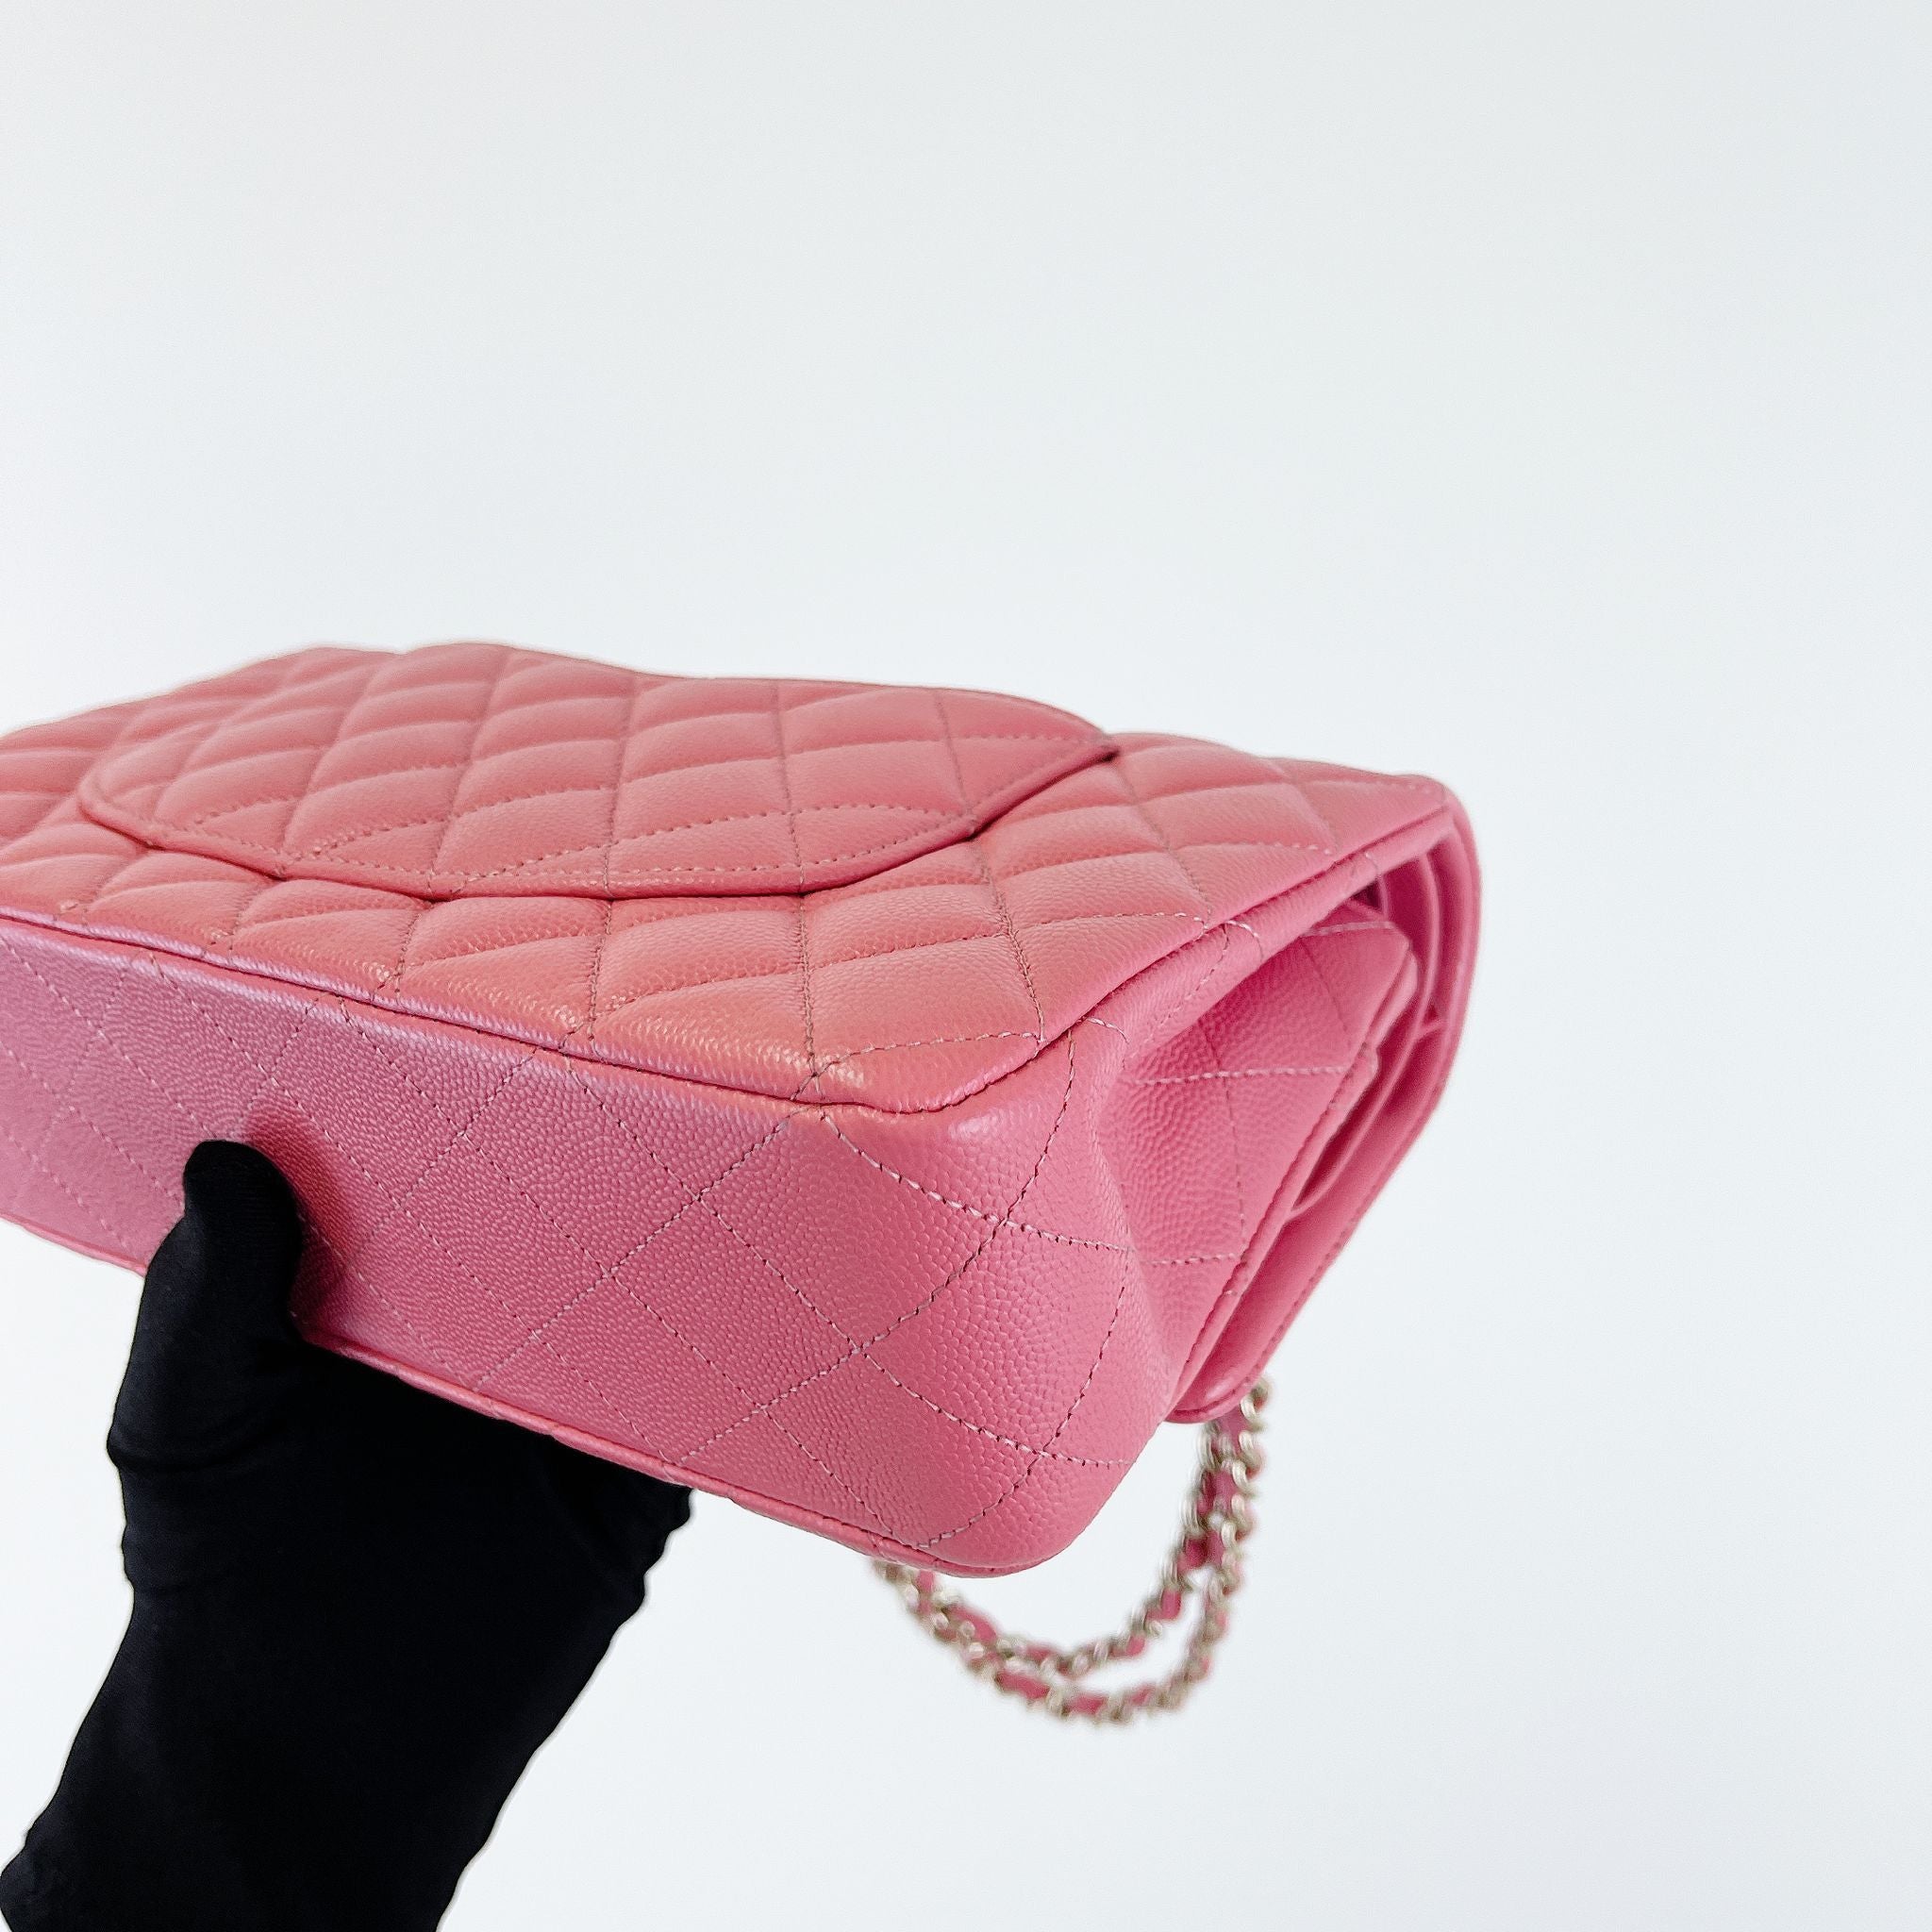 bottom-perspective-chanel-pink-handbag